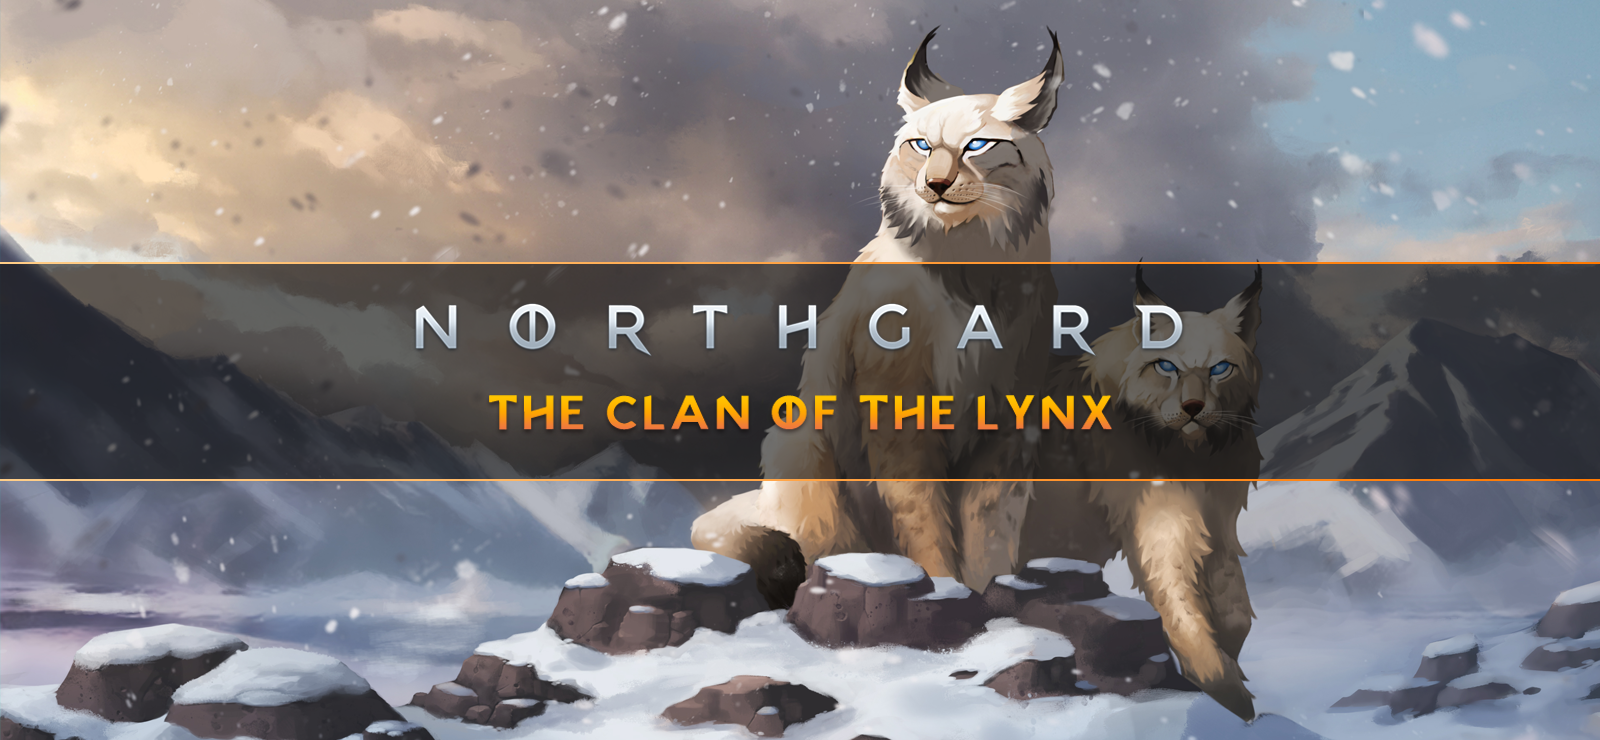 Northgard - Brundr & Kaelinn, Clan Of The Lynx